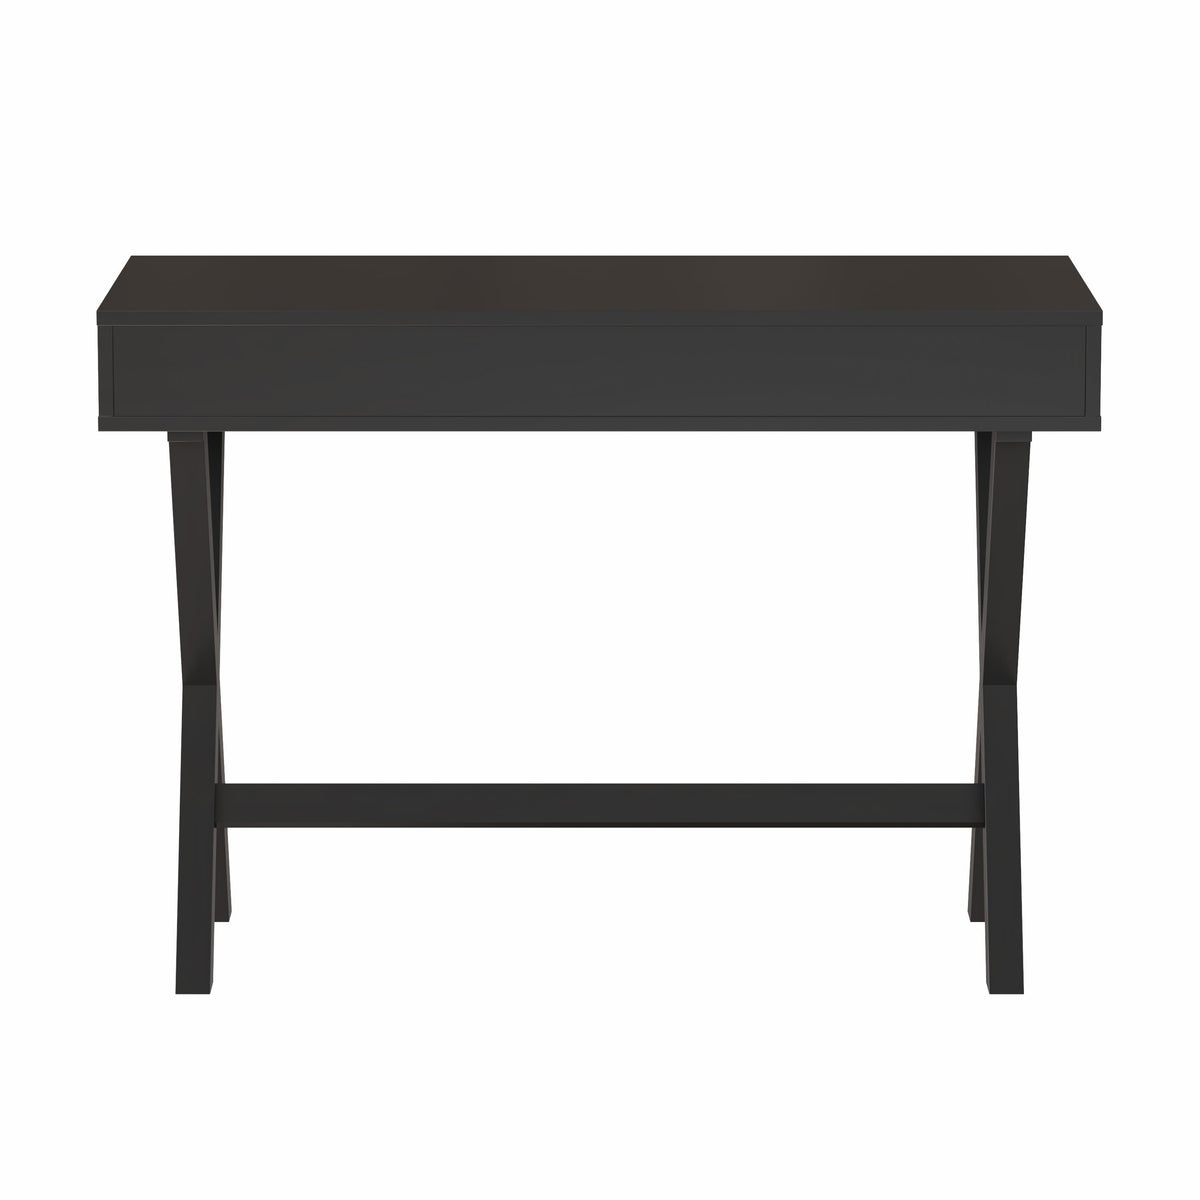 Black |#| Home Office Writing Computer Desk with Open Storage - Bedroom Desk, Black